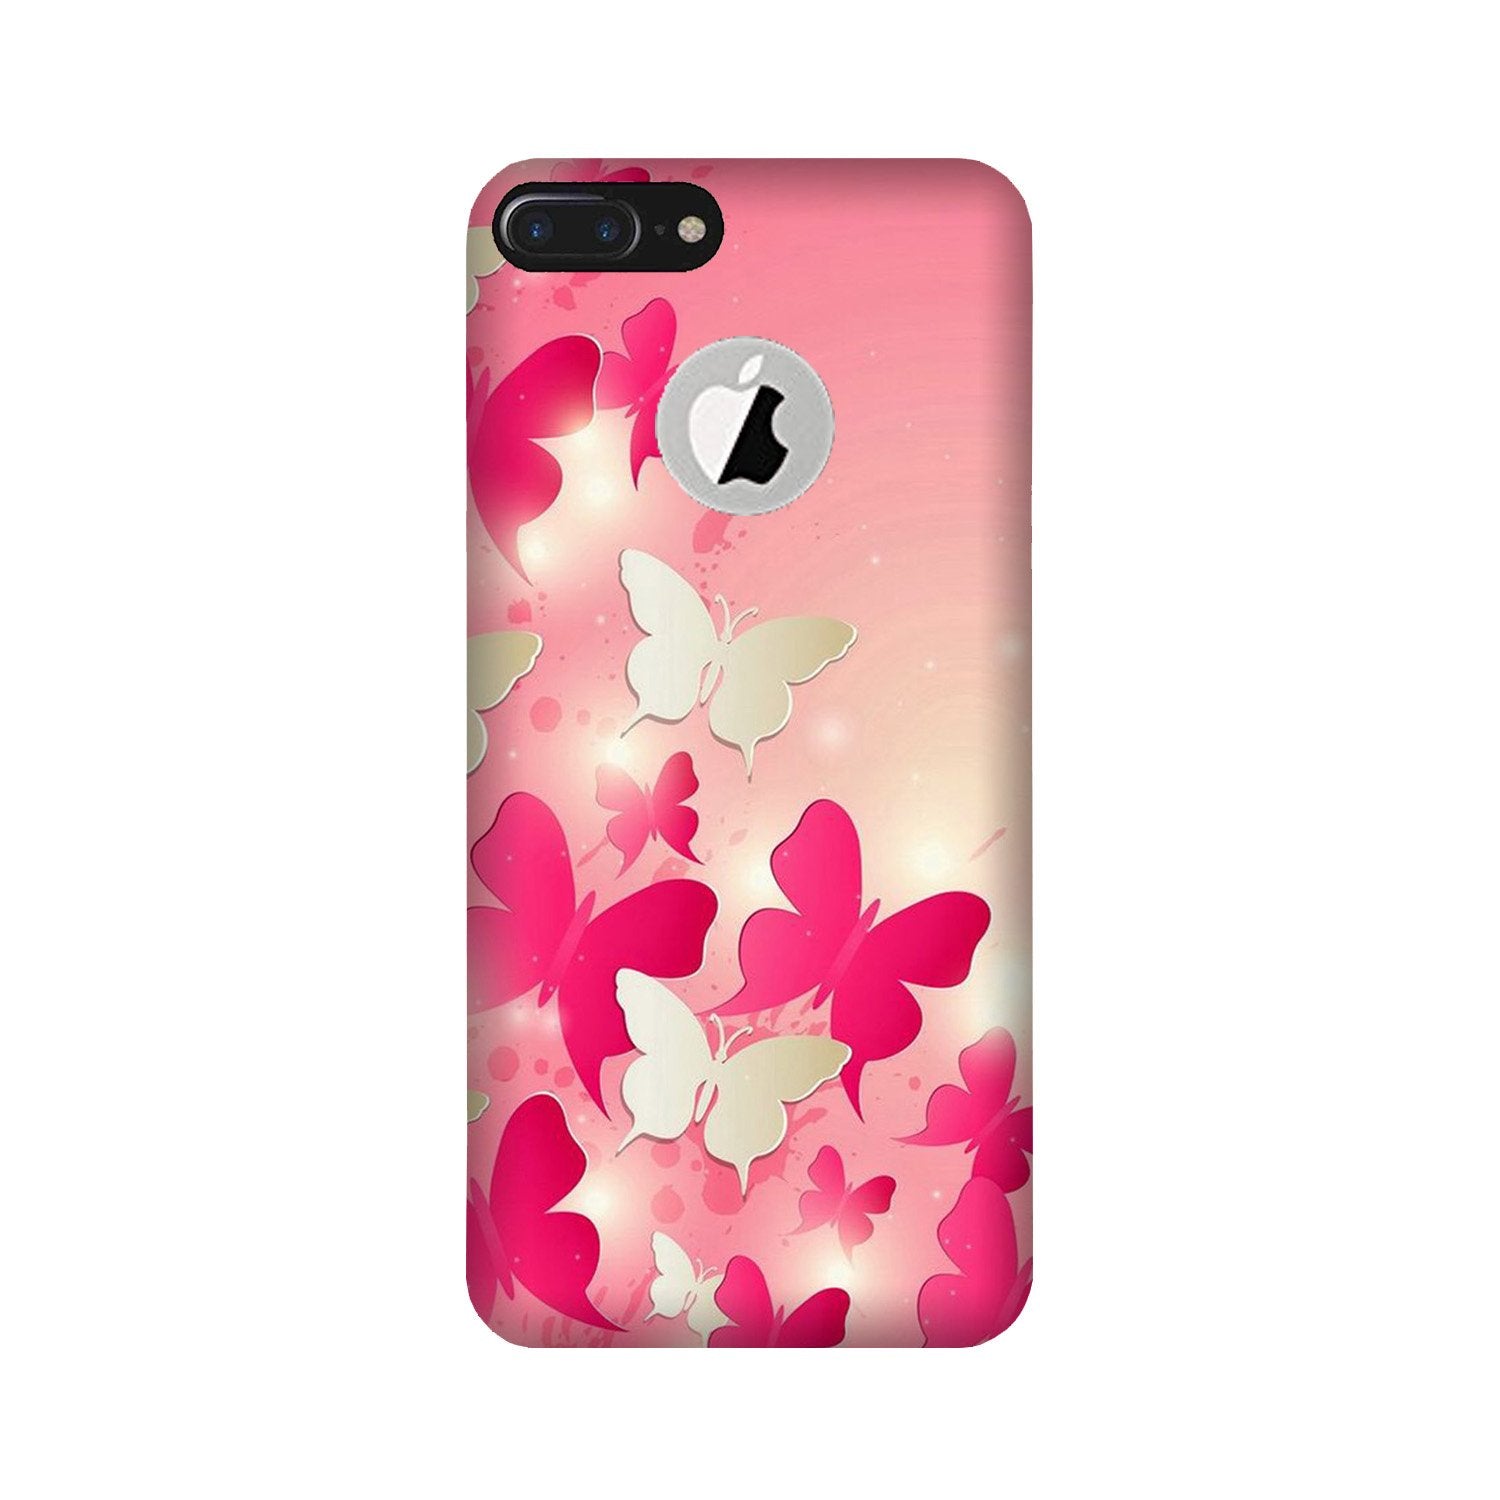 White Pick Butterflies Case for iPhone 7 Plus logo cut